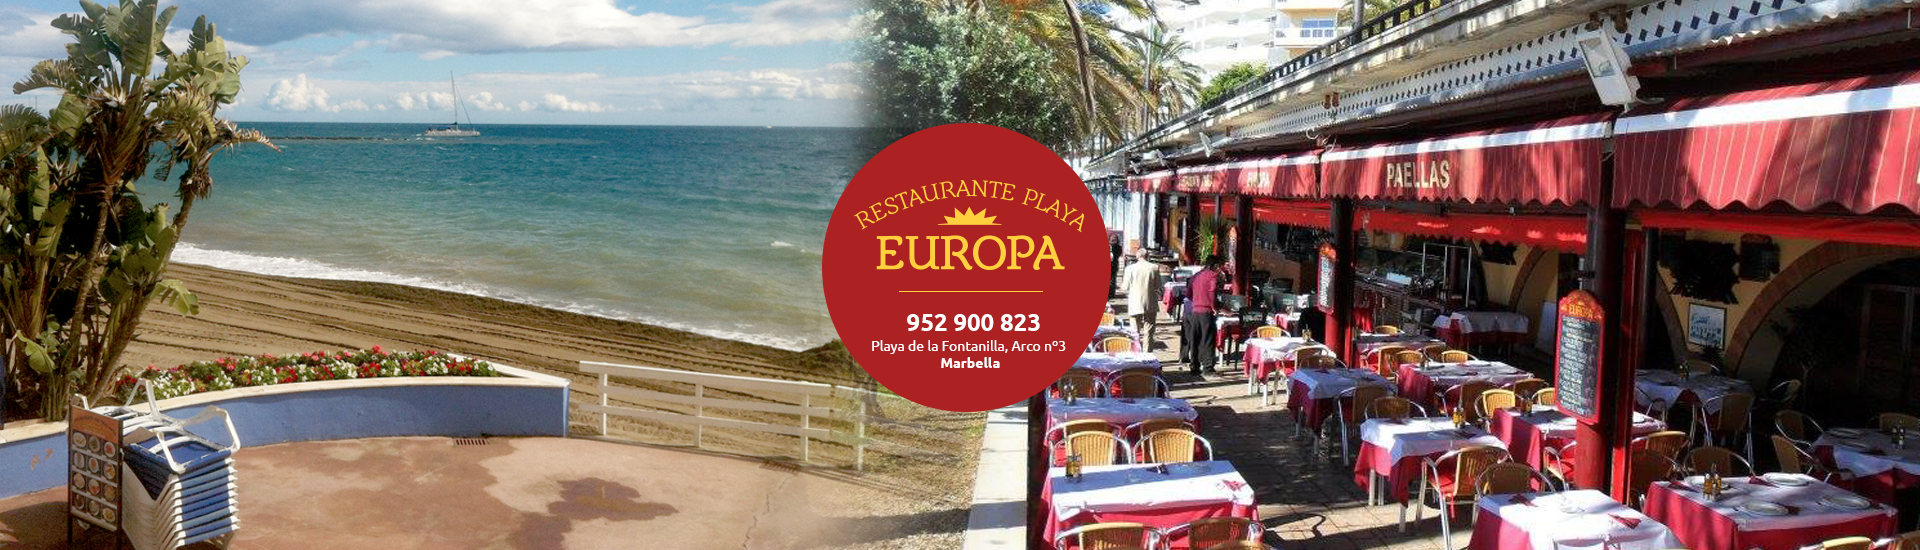 restaurante playa europa